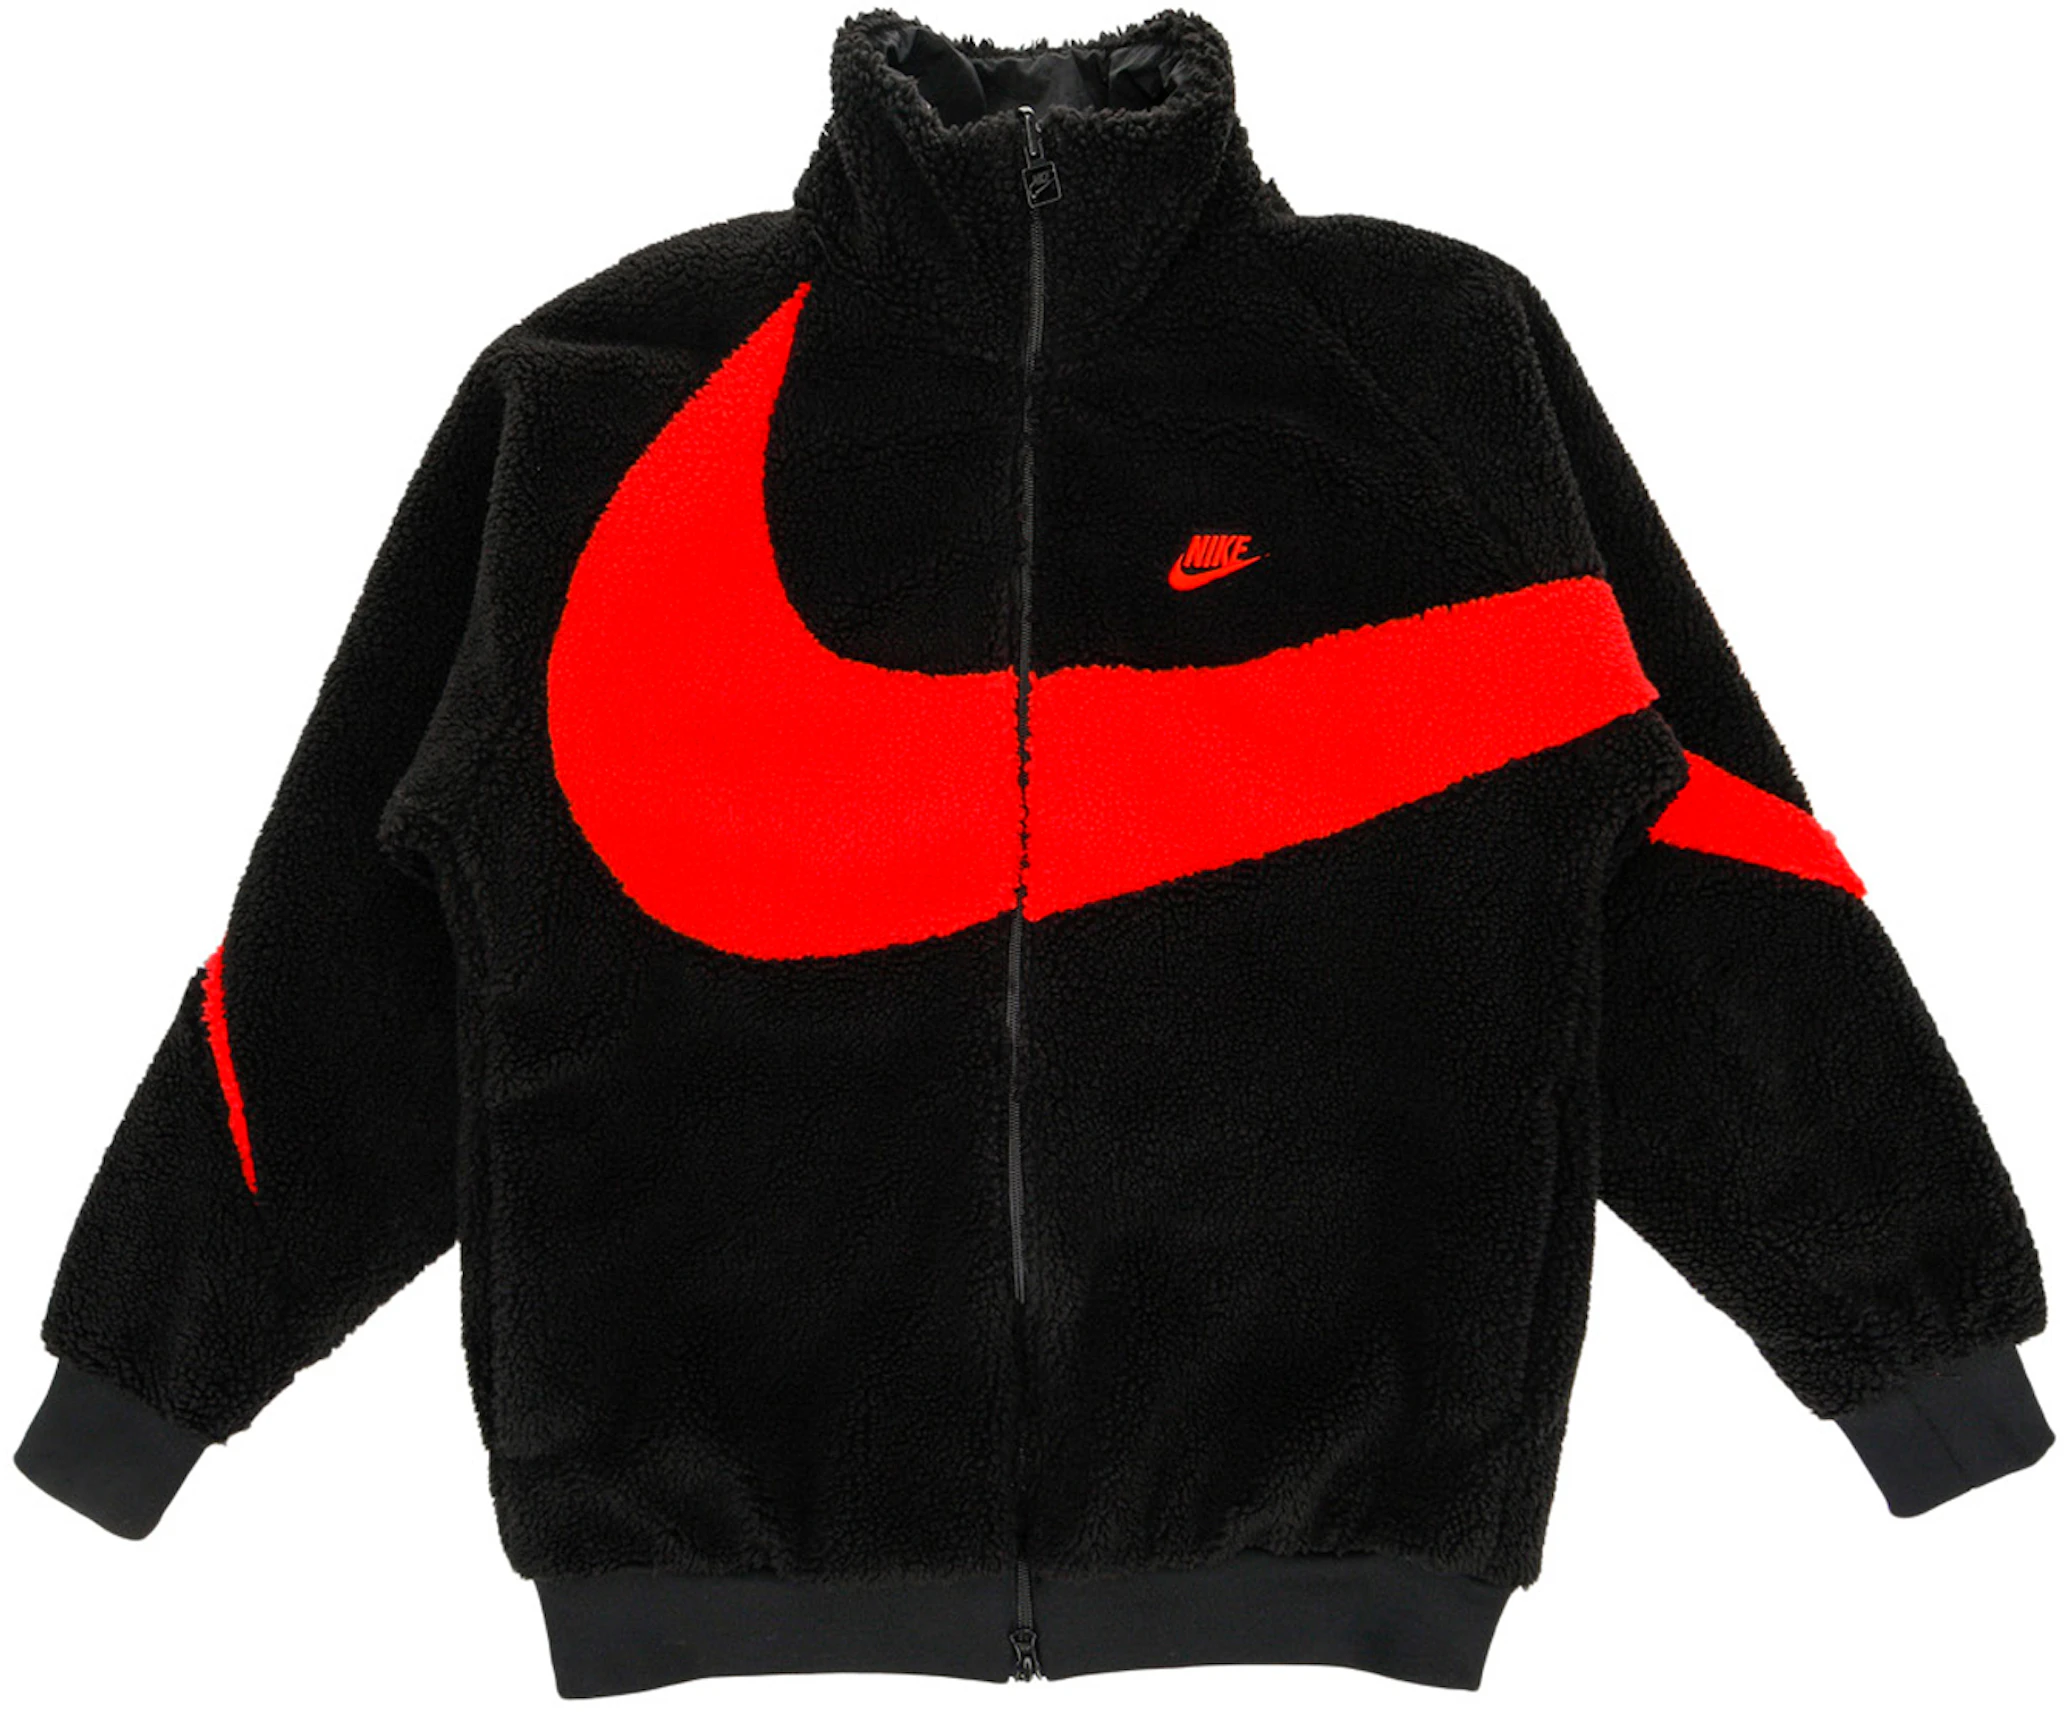 Respetuoso del medio ambiente alto Triplicar Nike Big Swoosh Reversible Boa Jacket (Asia Sizing) Black Chili Red - FW21  - US